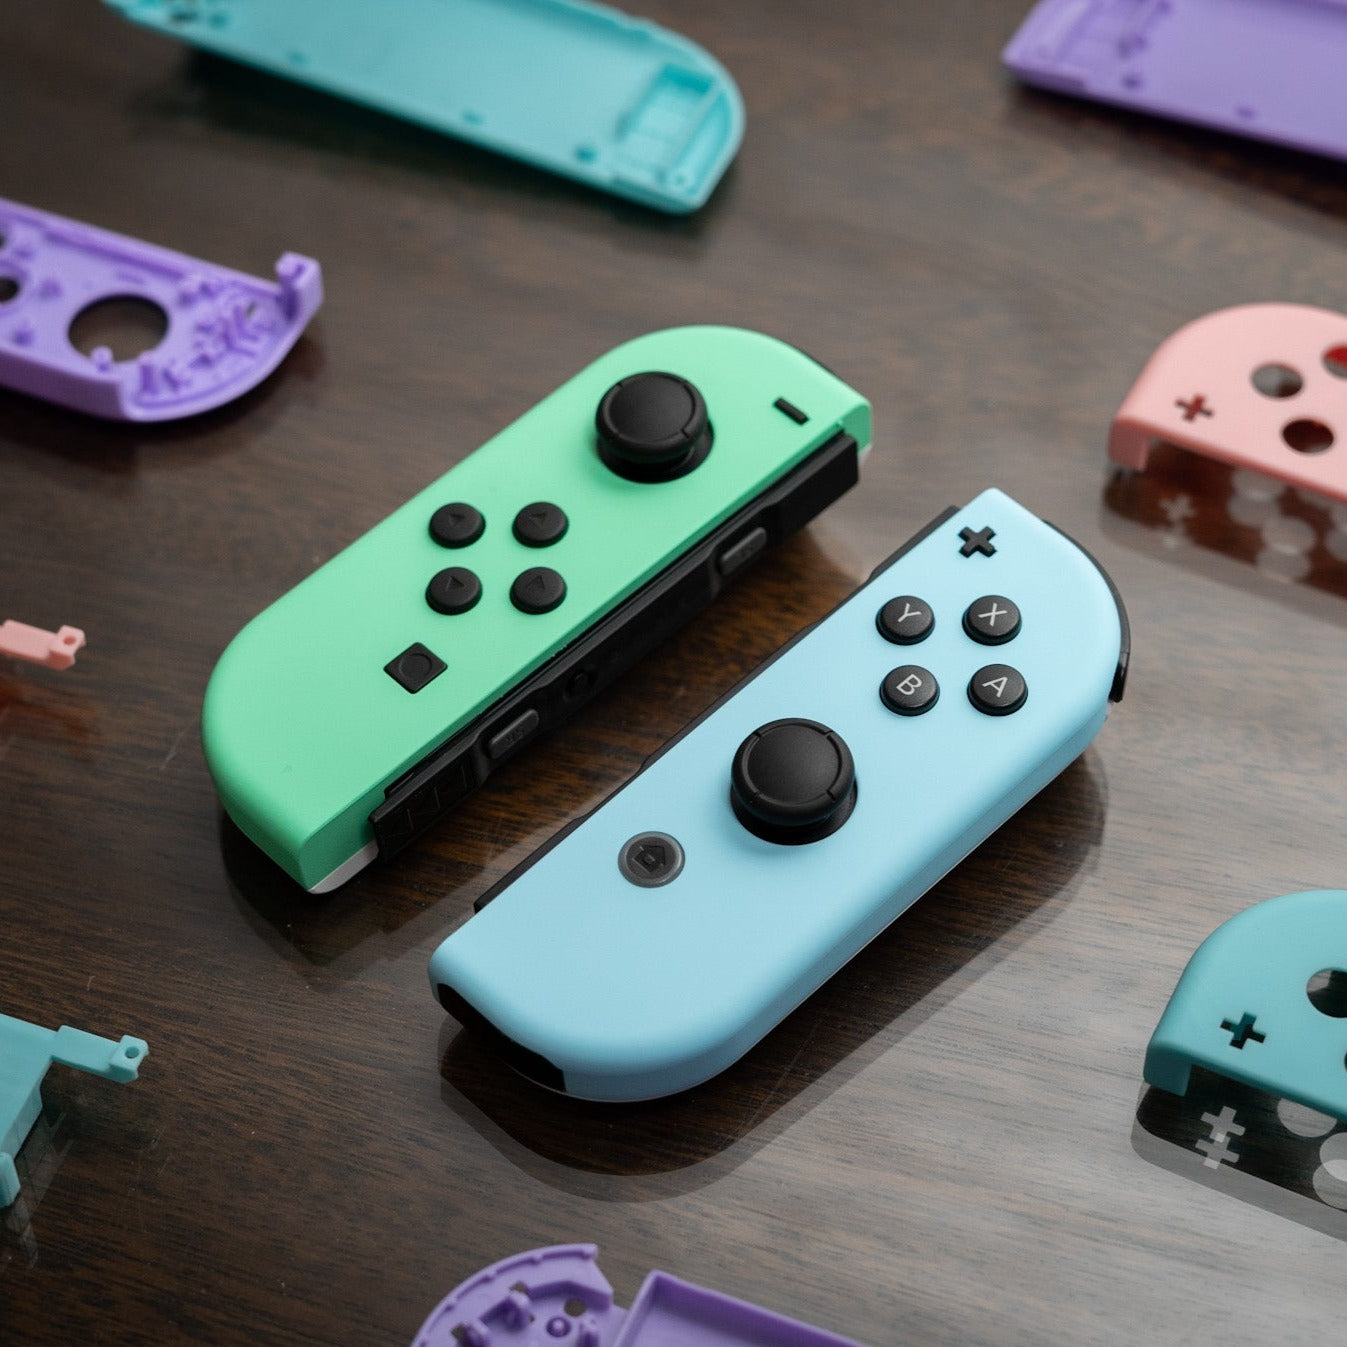 How to update Nintendo Switch Joy-Cons